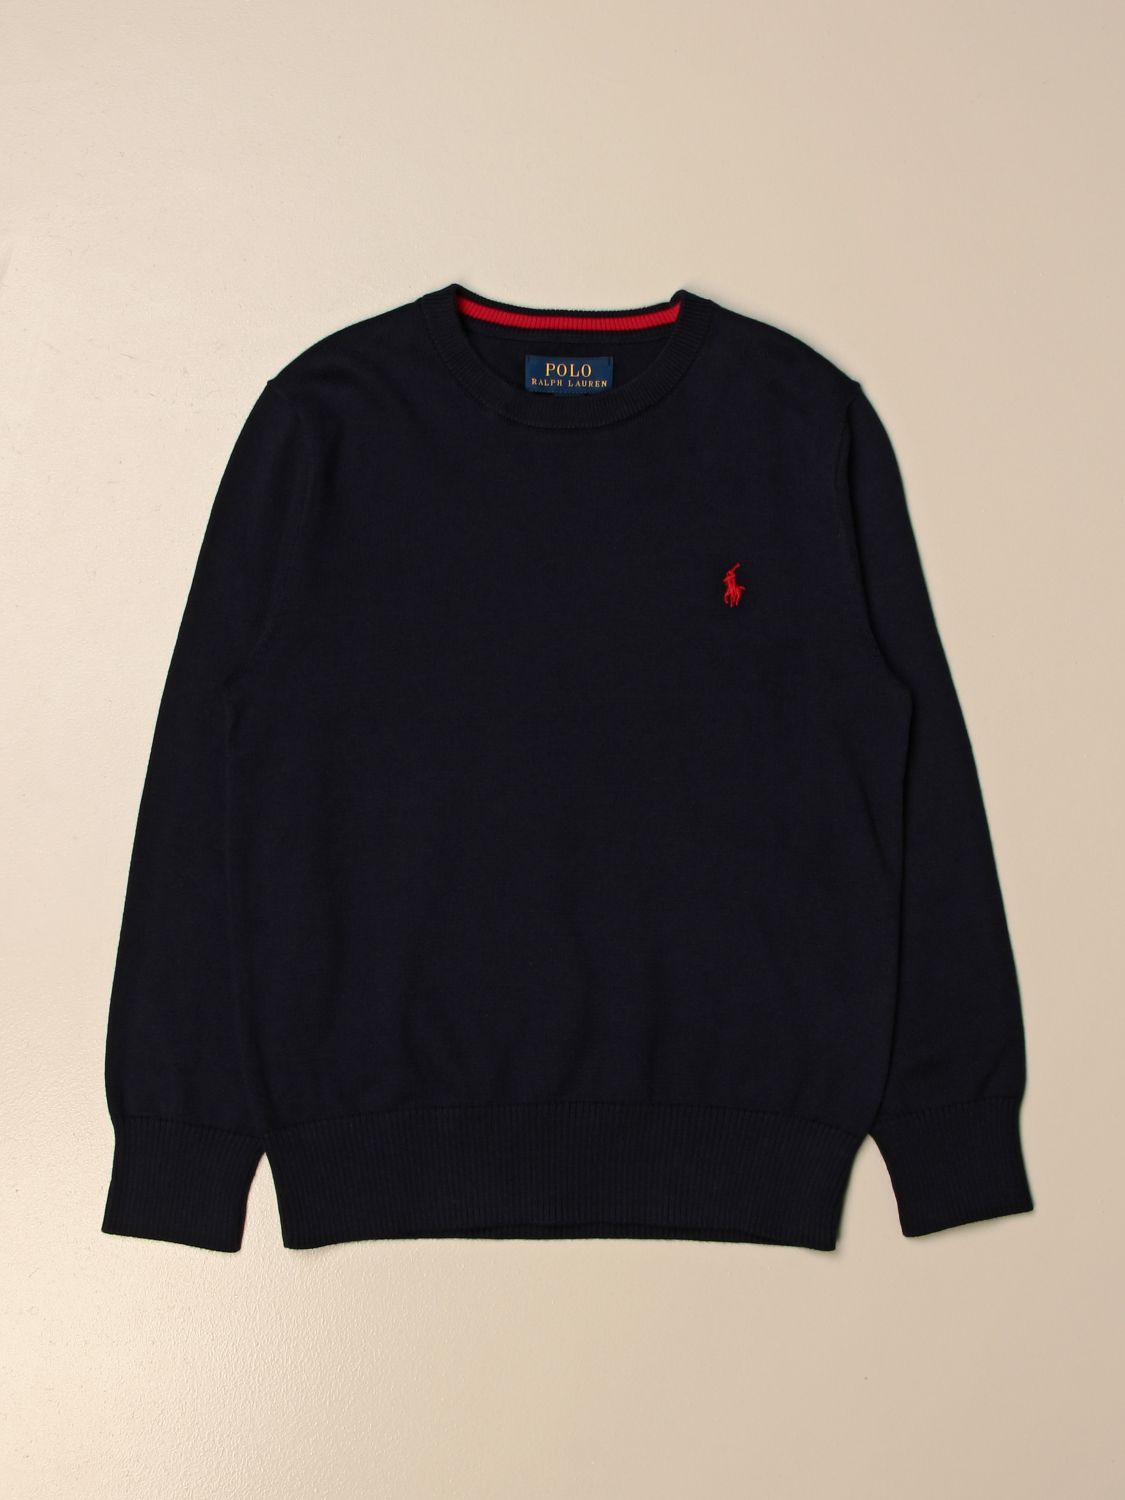 POLO RALPH LAUREN BOY: crewneck sweater in Pima cotton - Navy | Polo Ralph  Lauren Boy sweater 323799887 online on 